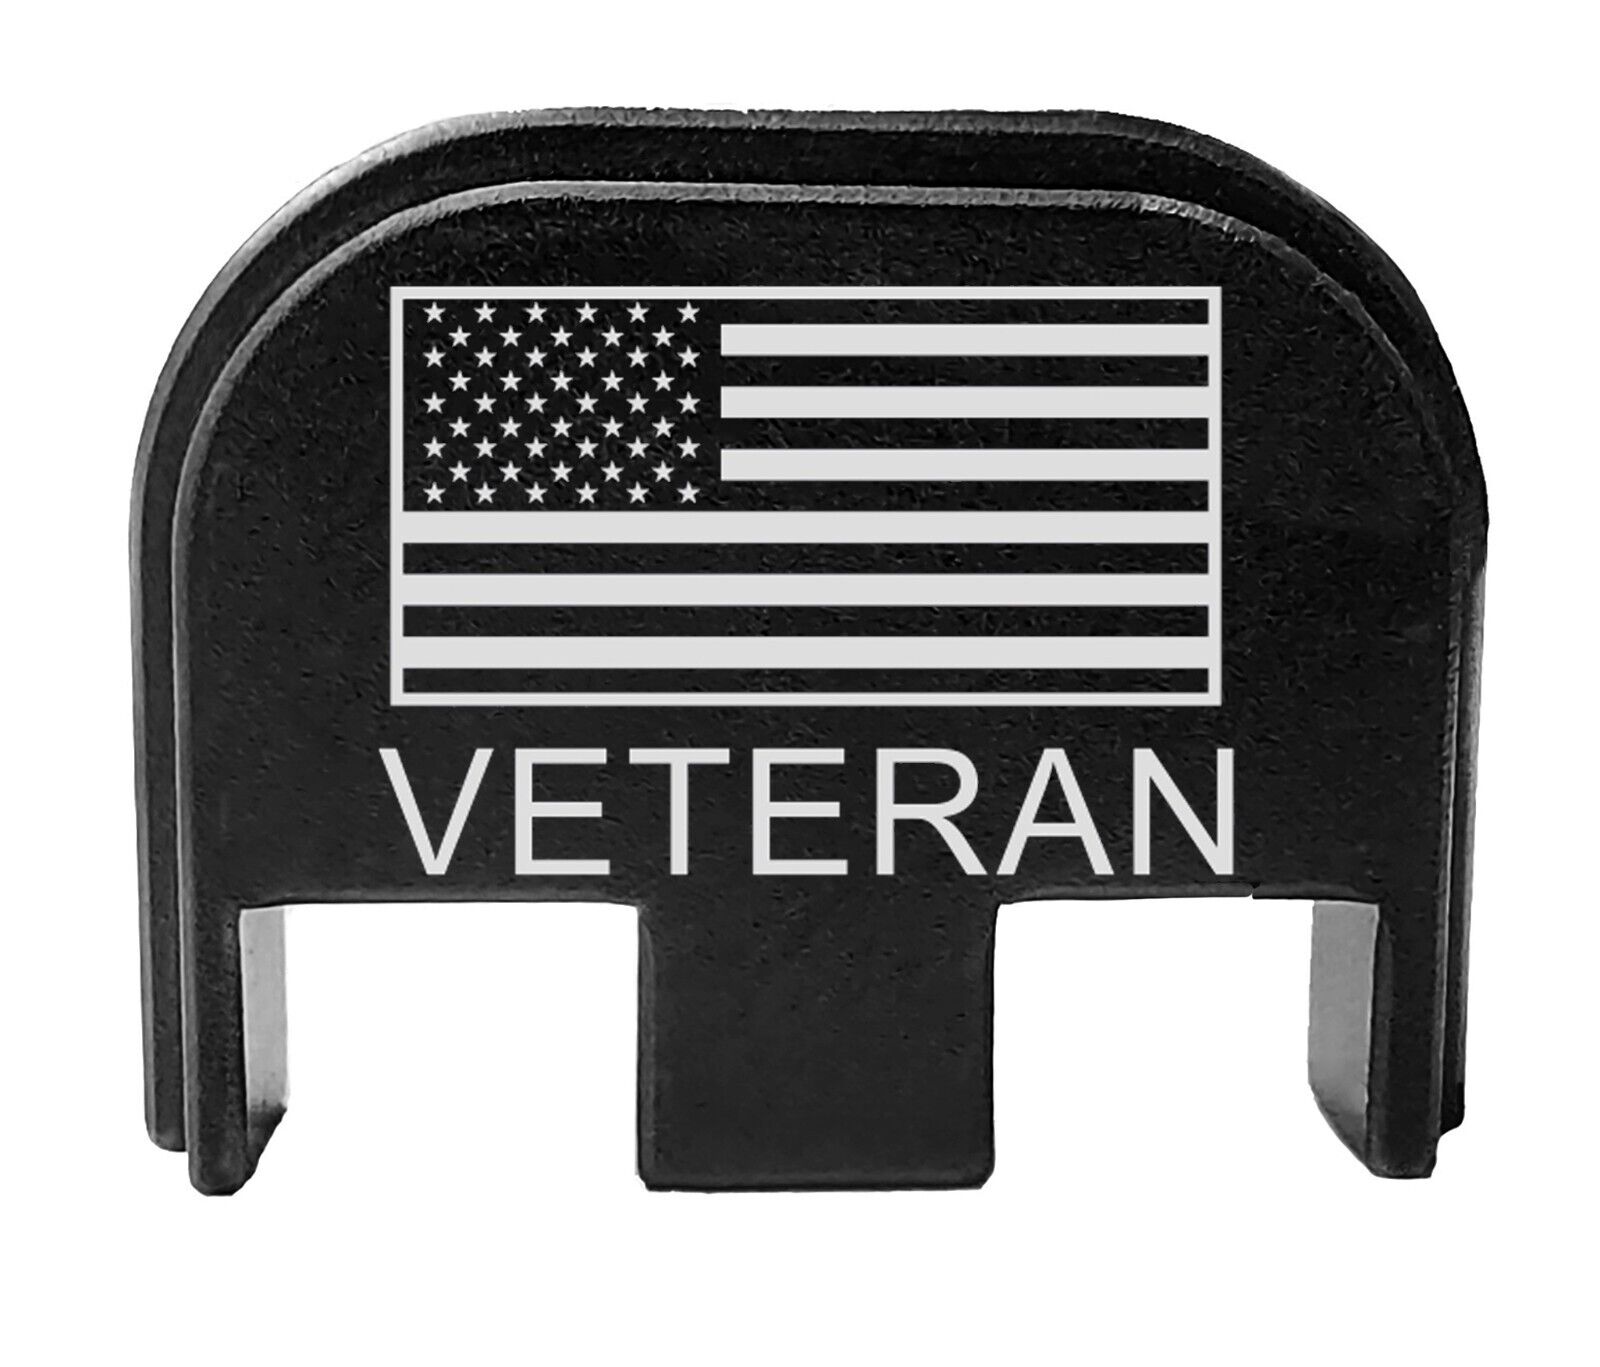 Rear Slide Cover Plate Back for Glock Model Gen 1 thru 5 Bastion US Flag Veteran